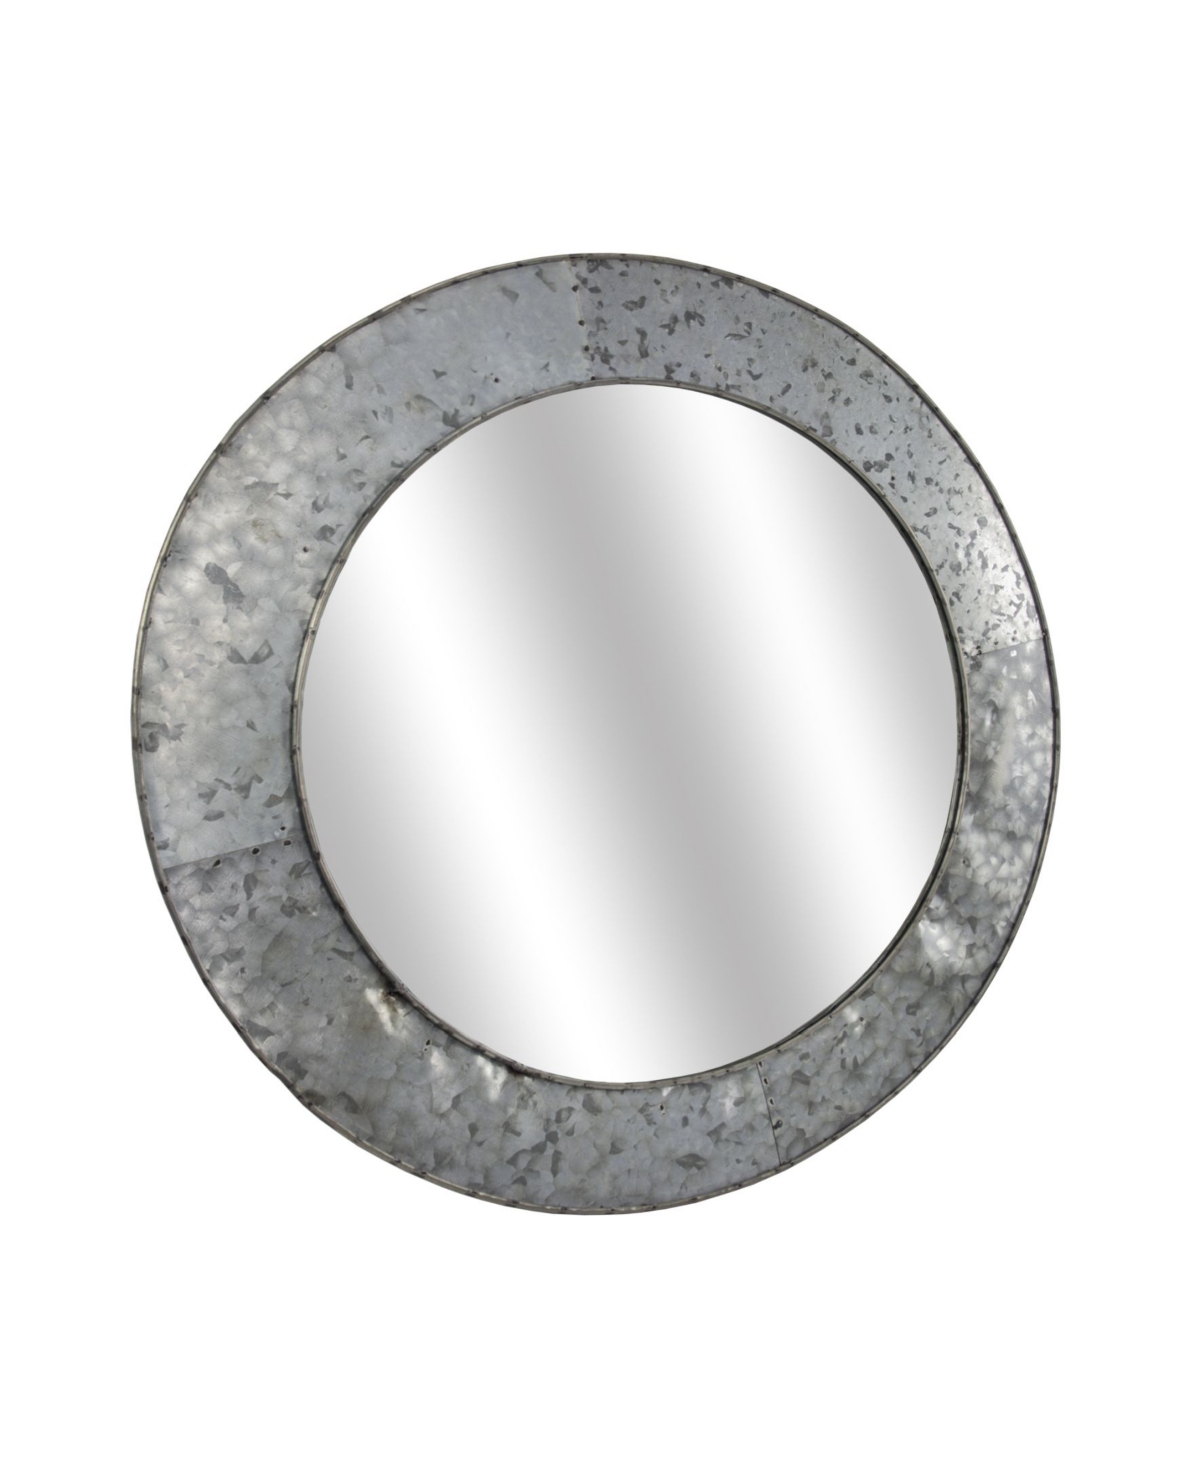 American Art Decor Galvanized Round Mirror - Gray